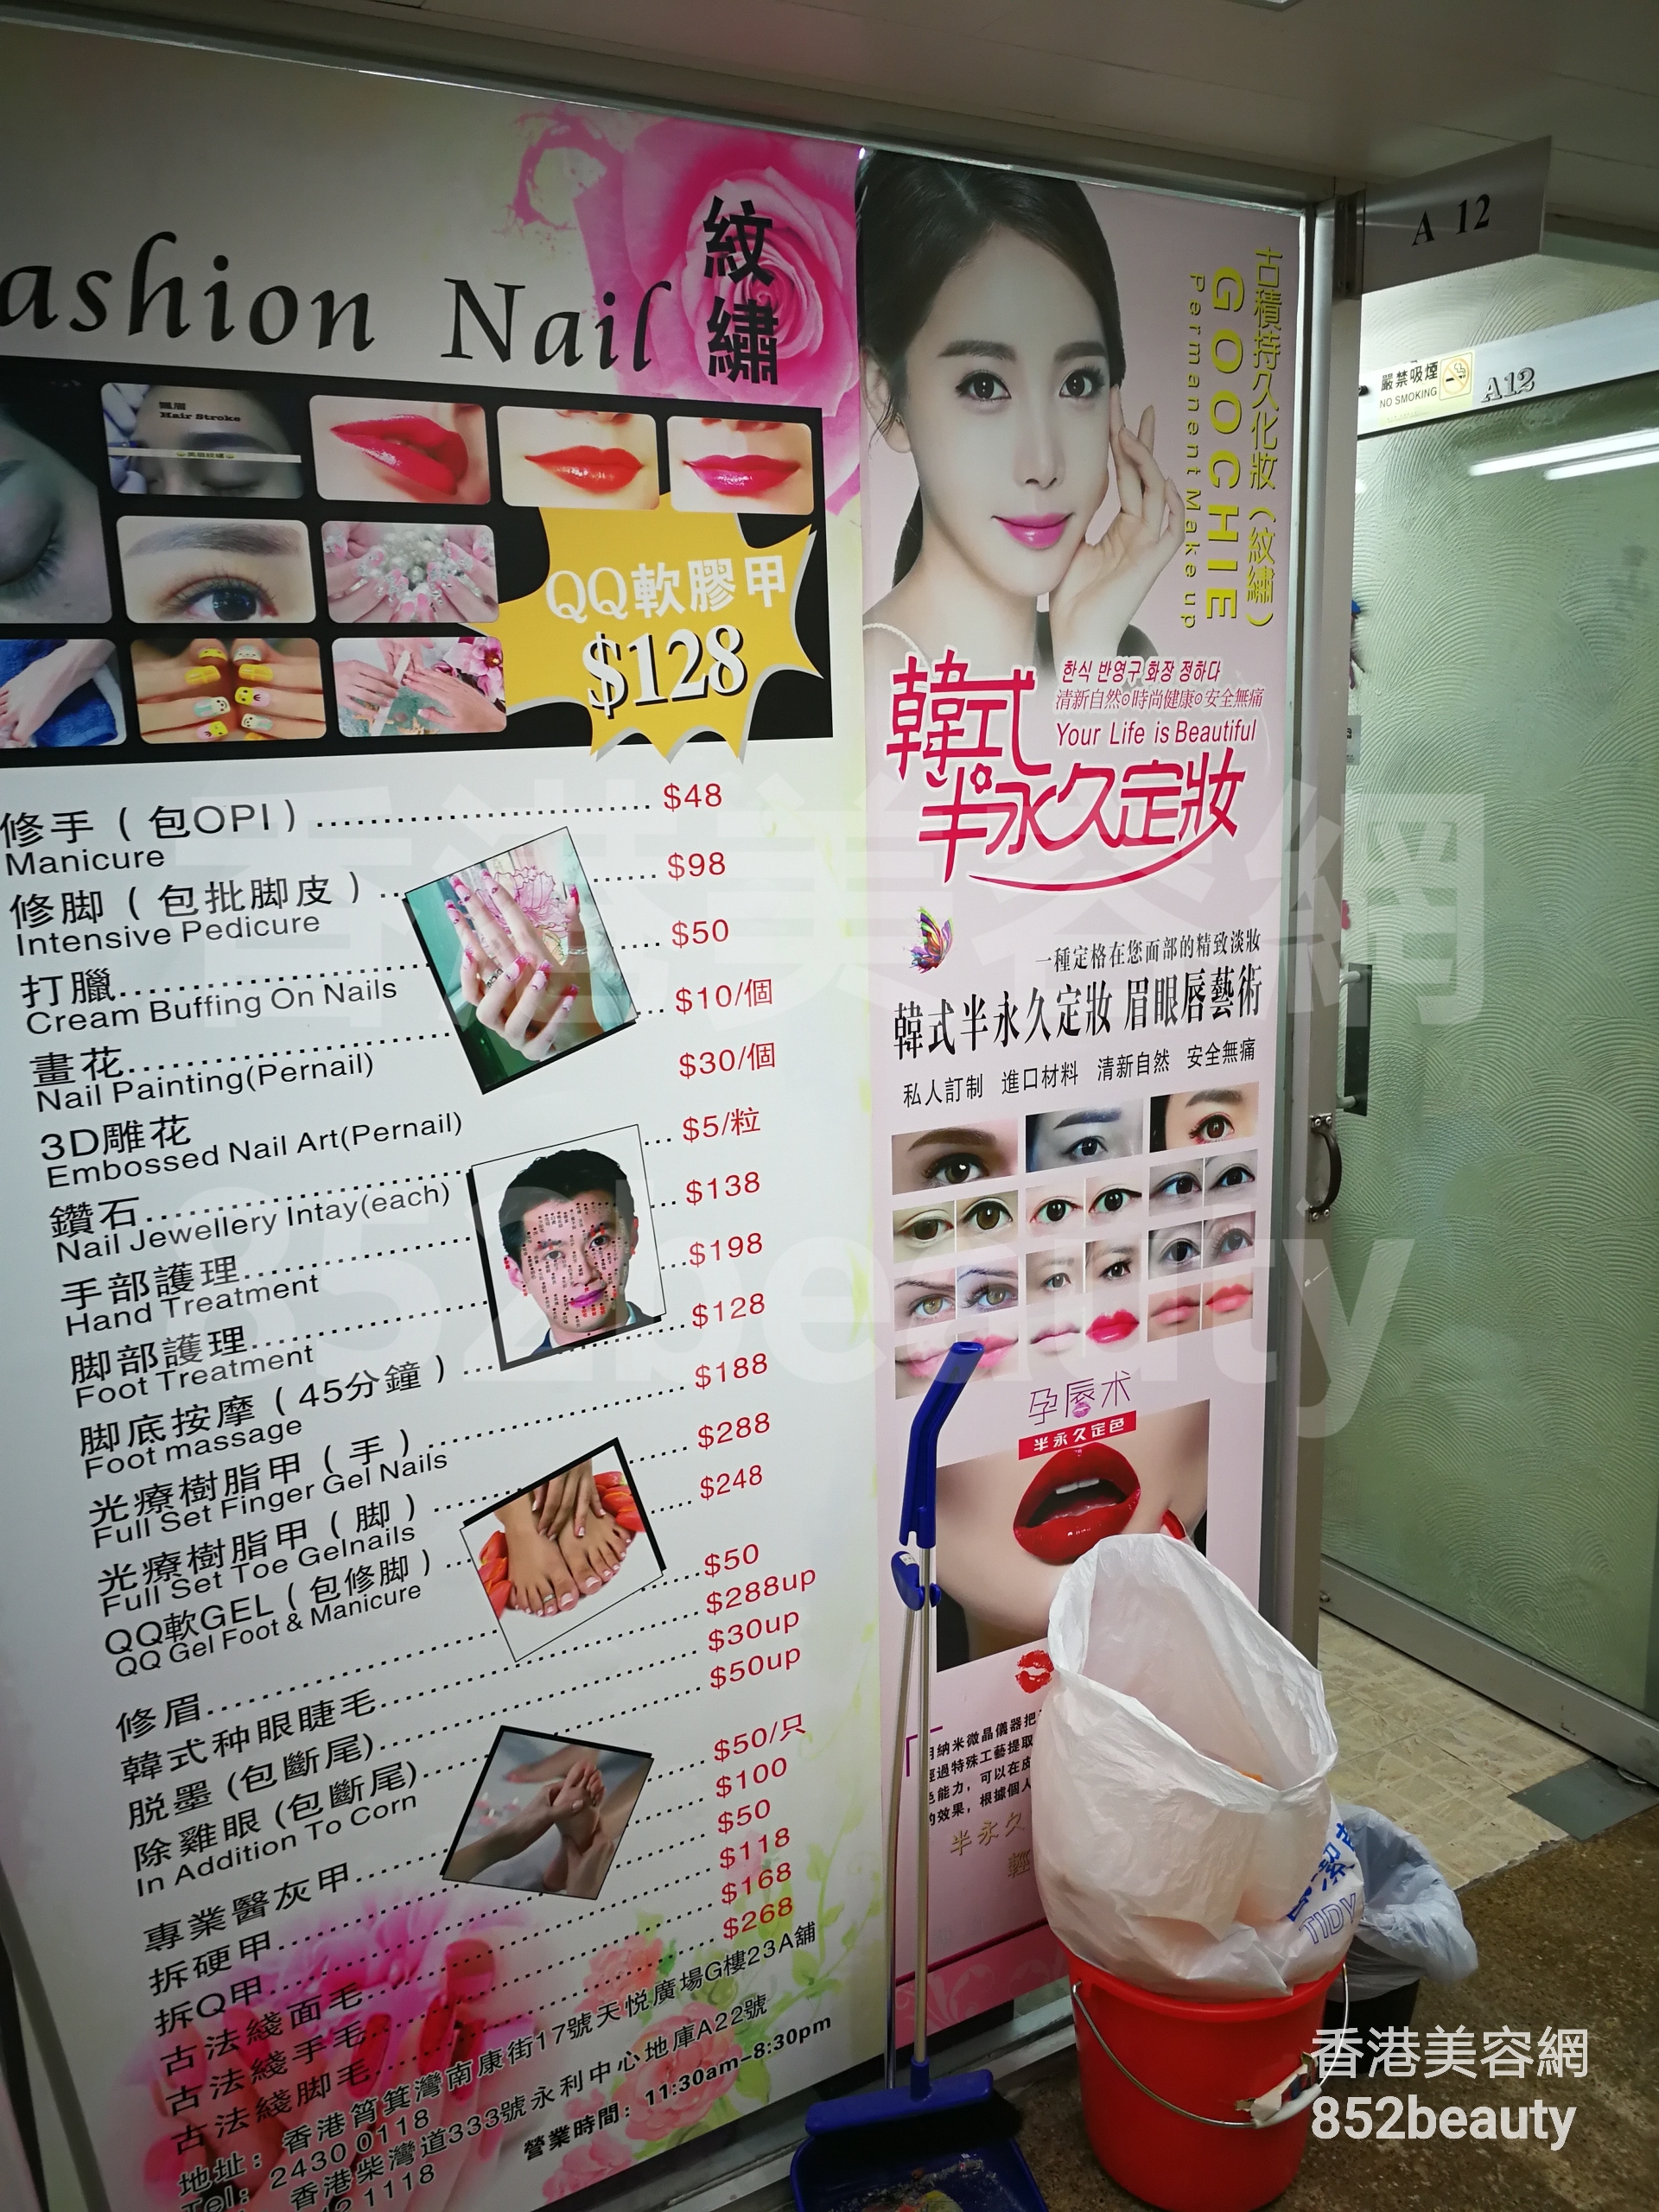 香港美容網 Hong Kong Beauty Salon 美容院 / 美容師: Fashion Nail